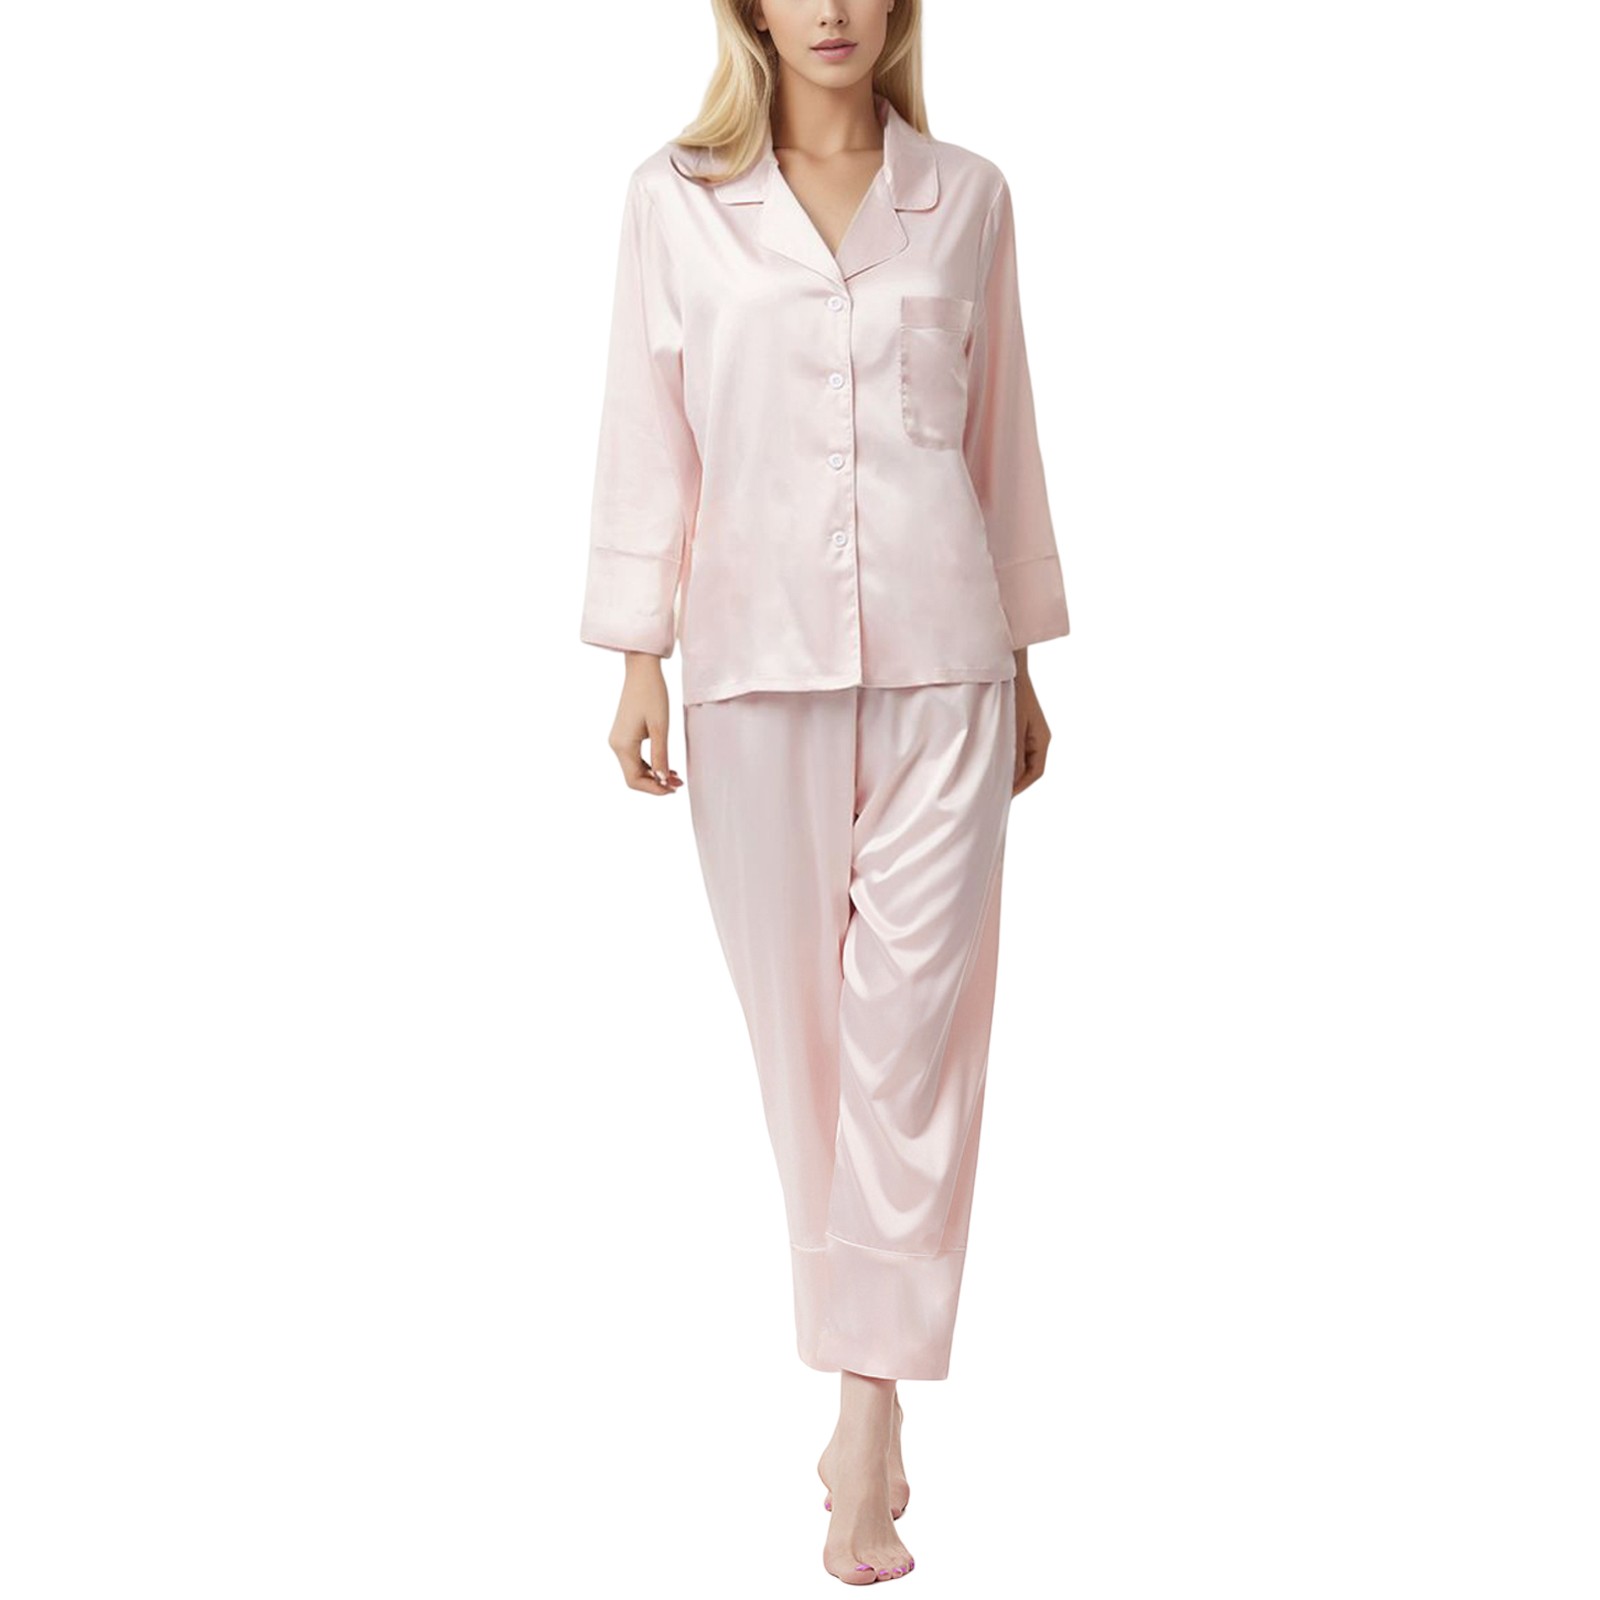 Qxutpo Womens Pajamas Plus Size Casual Lace Suspenders Home Wear ...